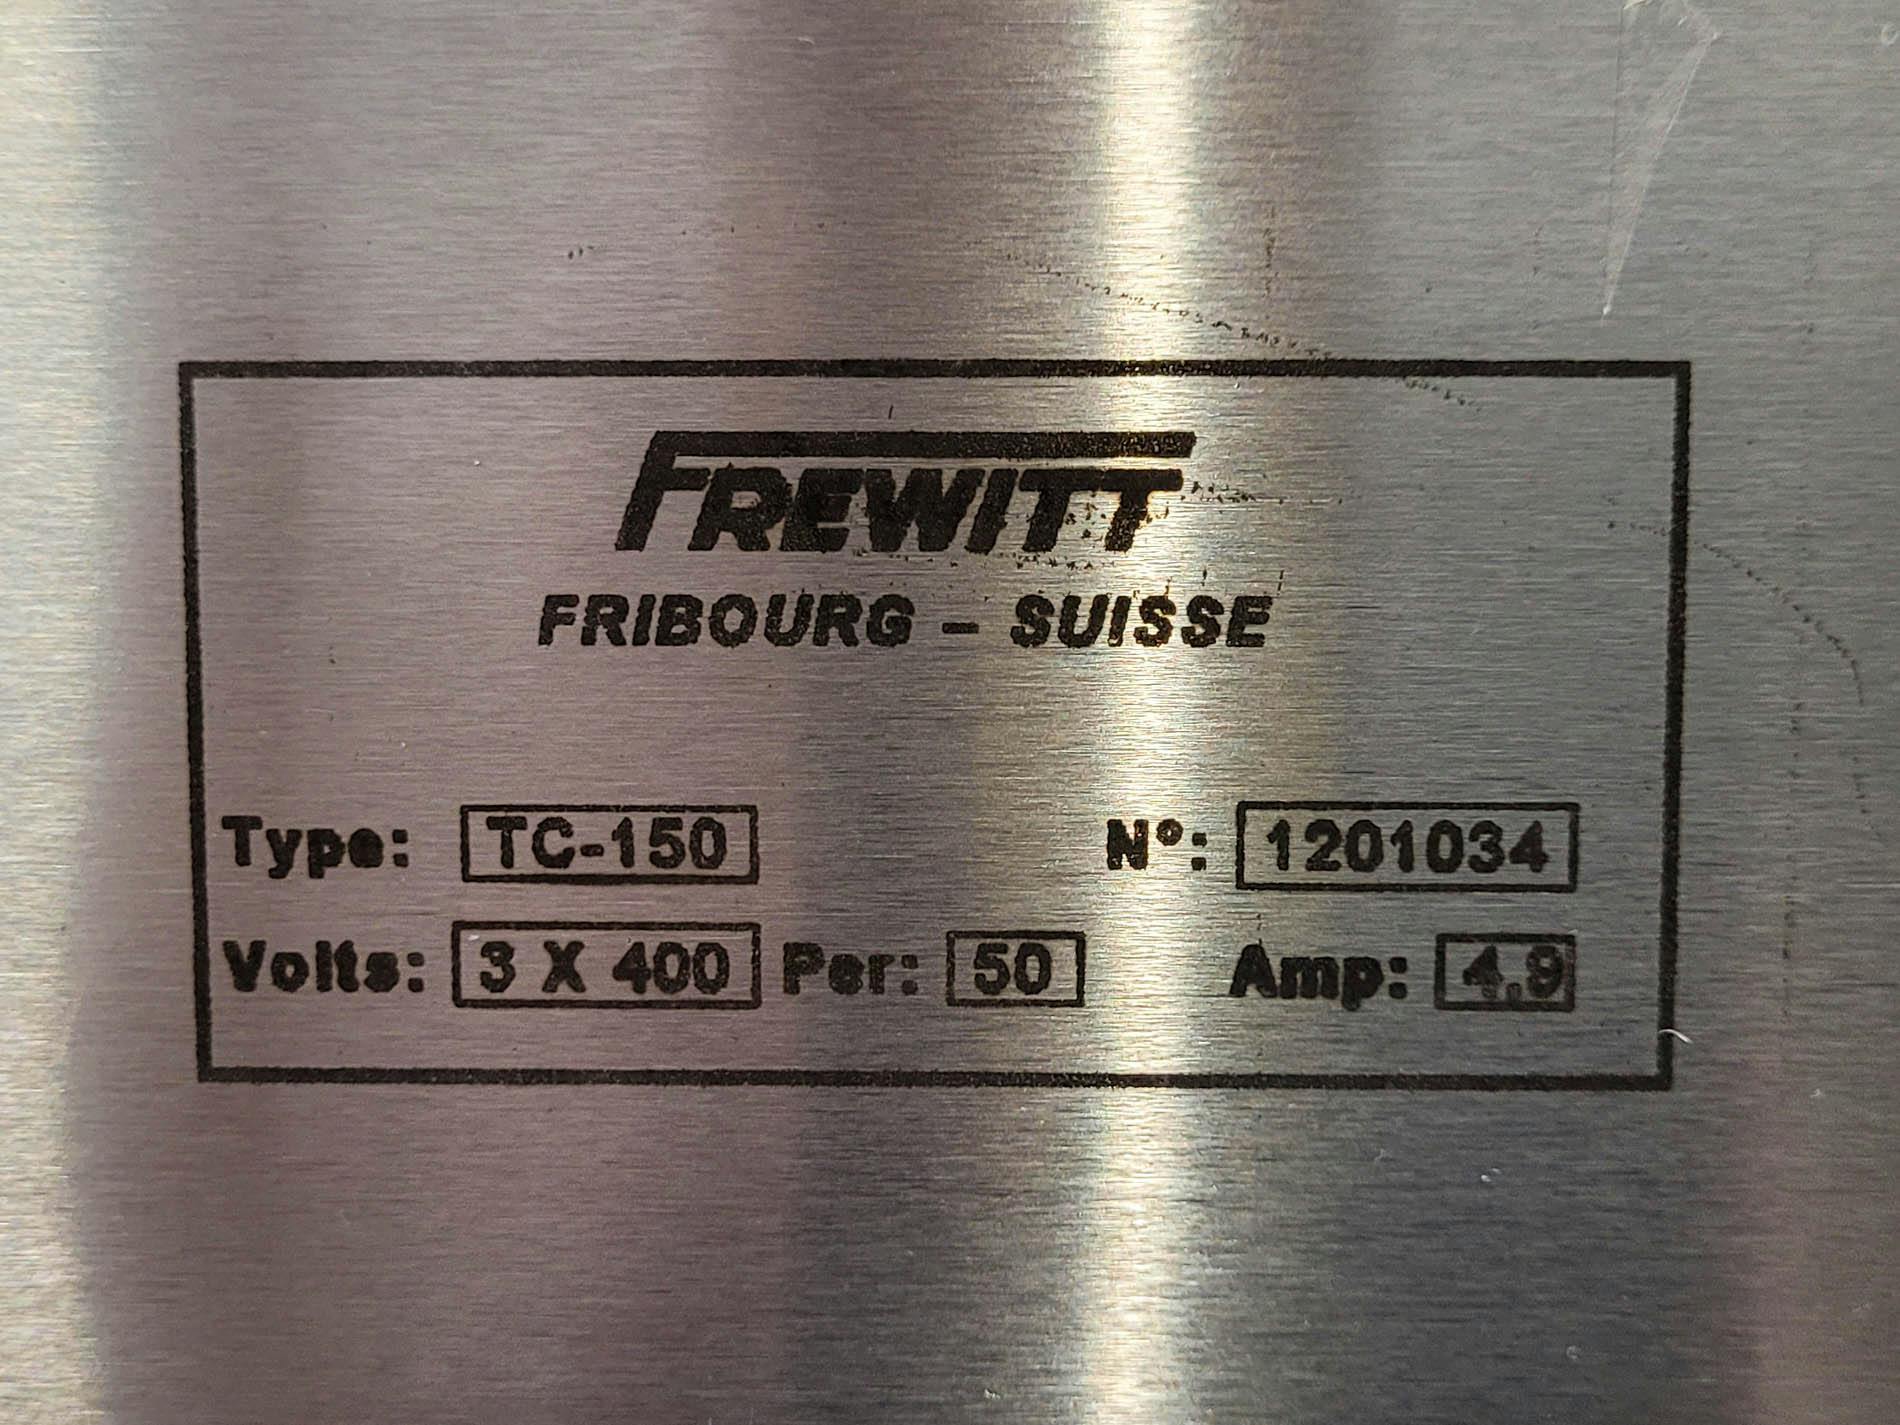 Frewitt Fribourg TC-150 - Sieve granulator - image 15